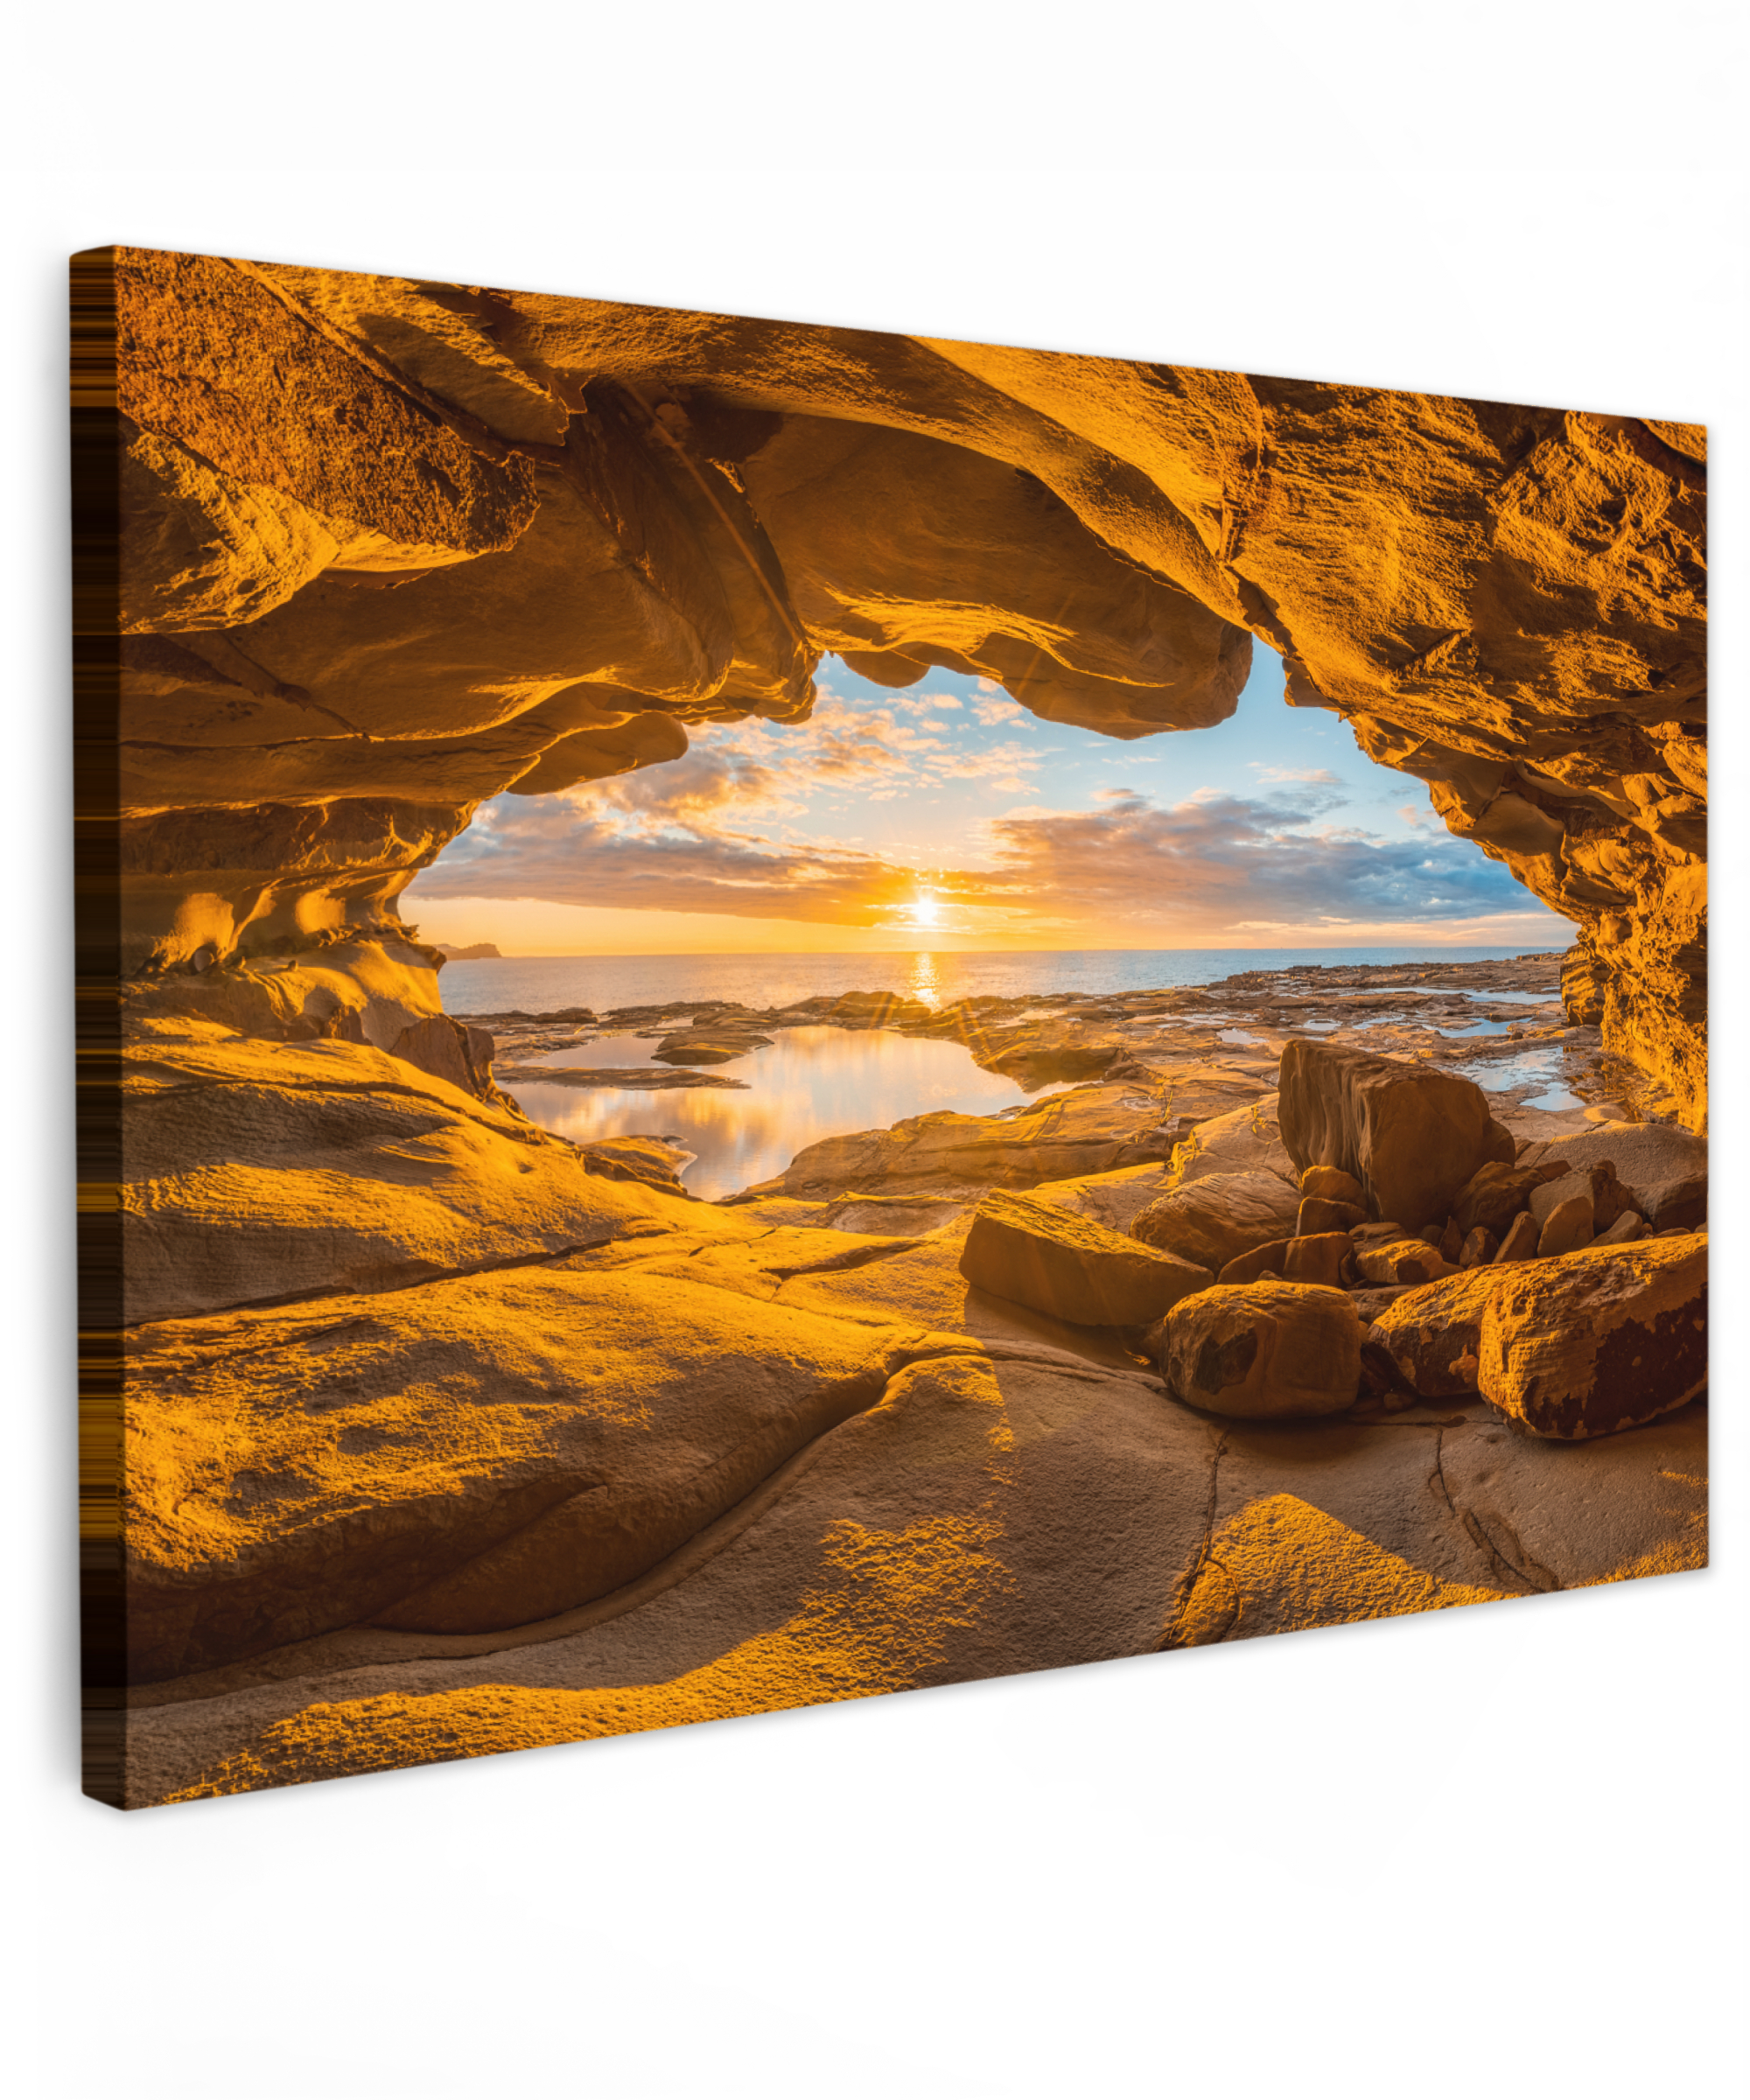 Leinwandbild - Höhle - Meer - Horizont - Sonnenuntergang